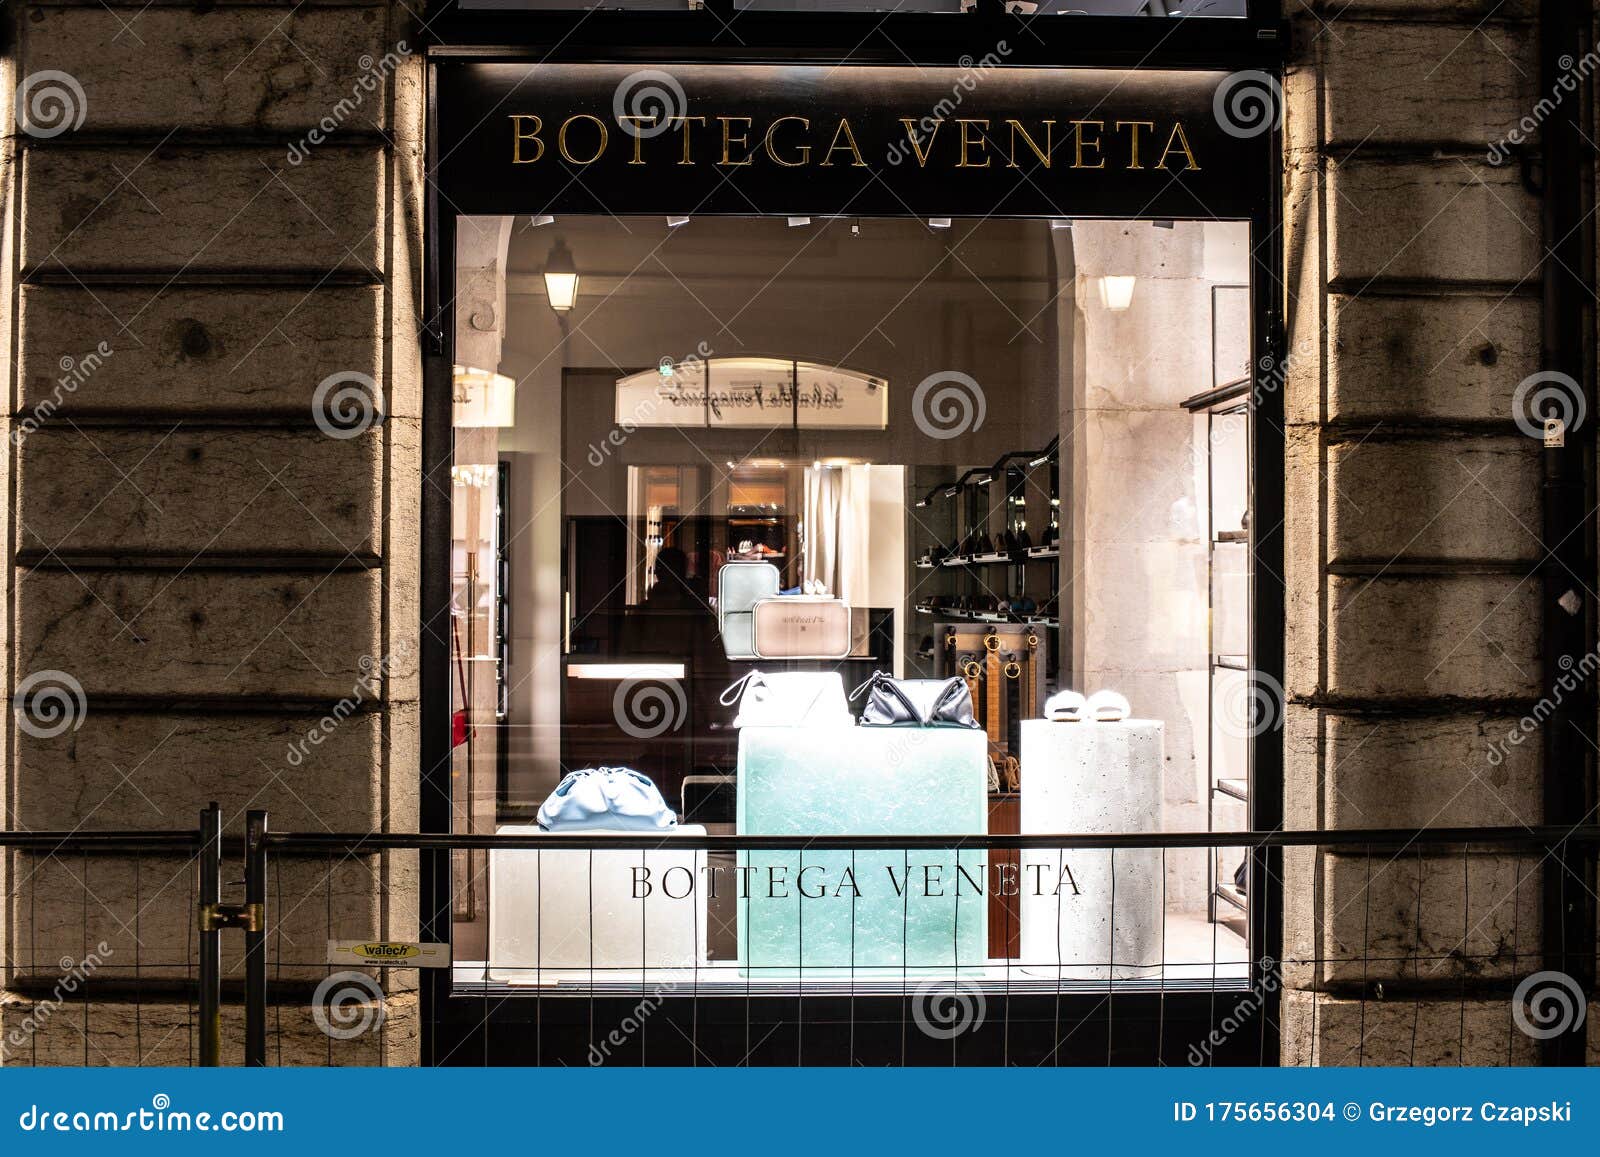 Bottega Veneta Fashion Store, Window Shop, Bags, Clothes and Shoes